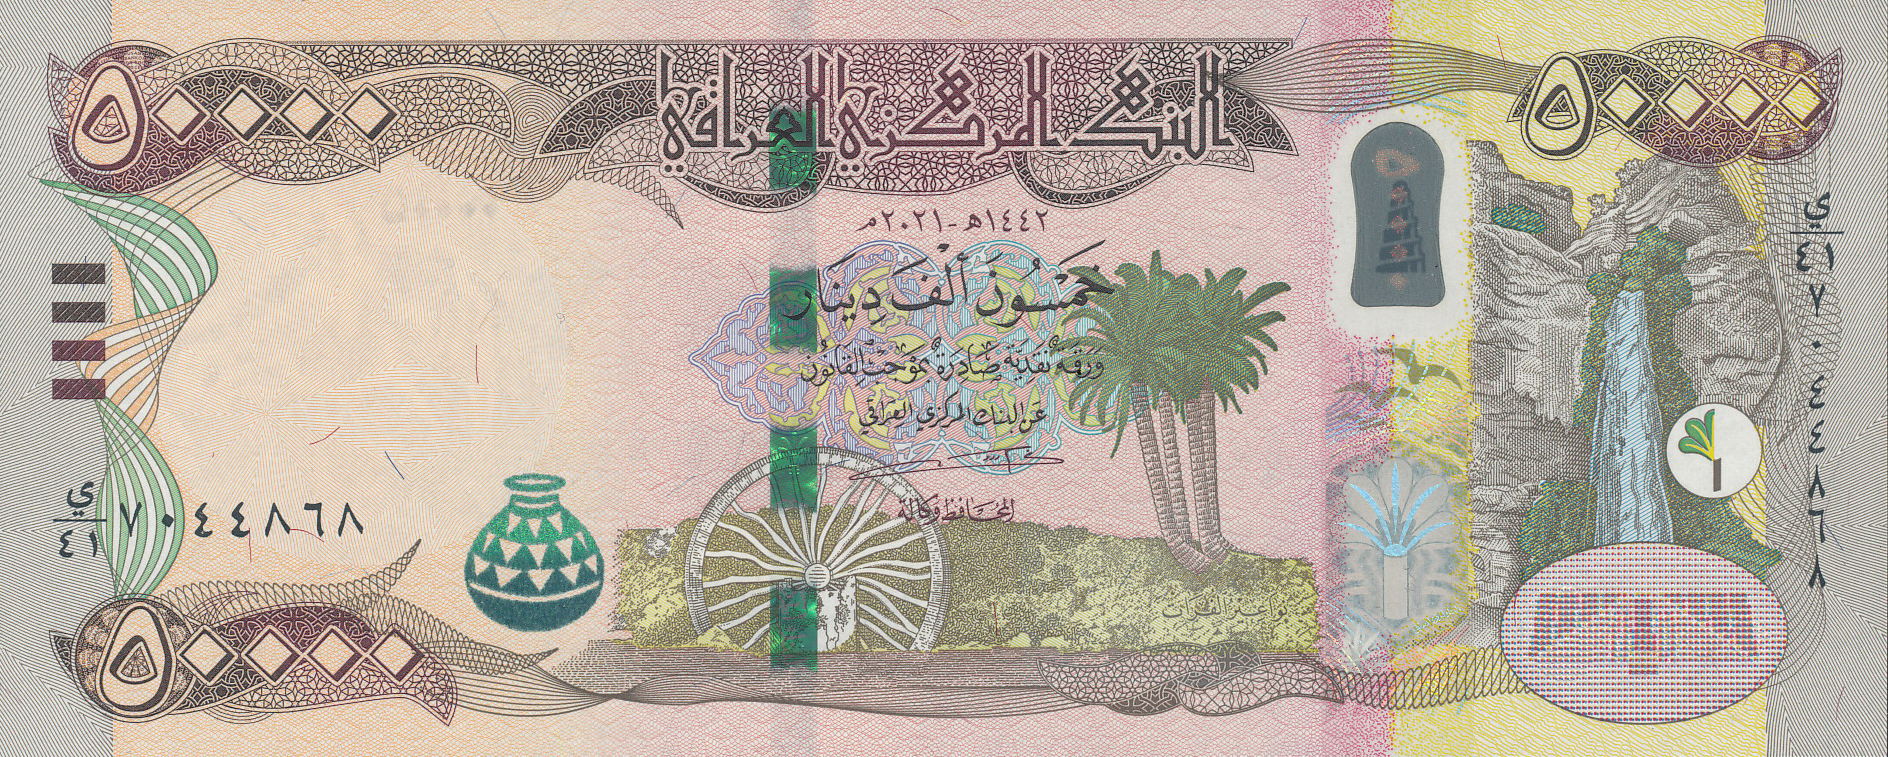 Iraq_CBI_50000_dinars_2021.00.00_B357c_P